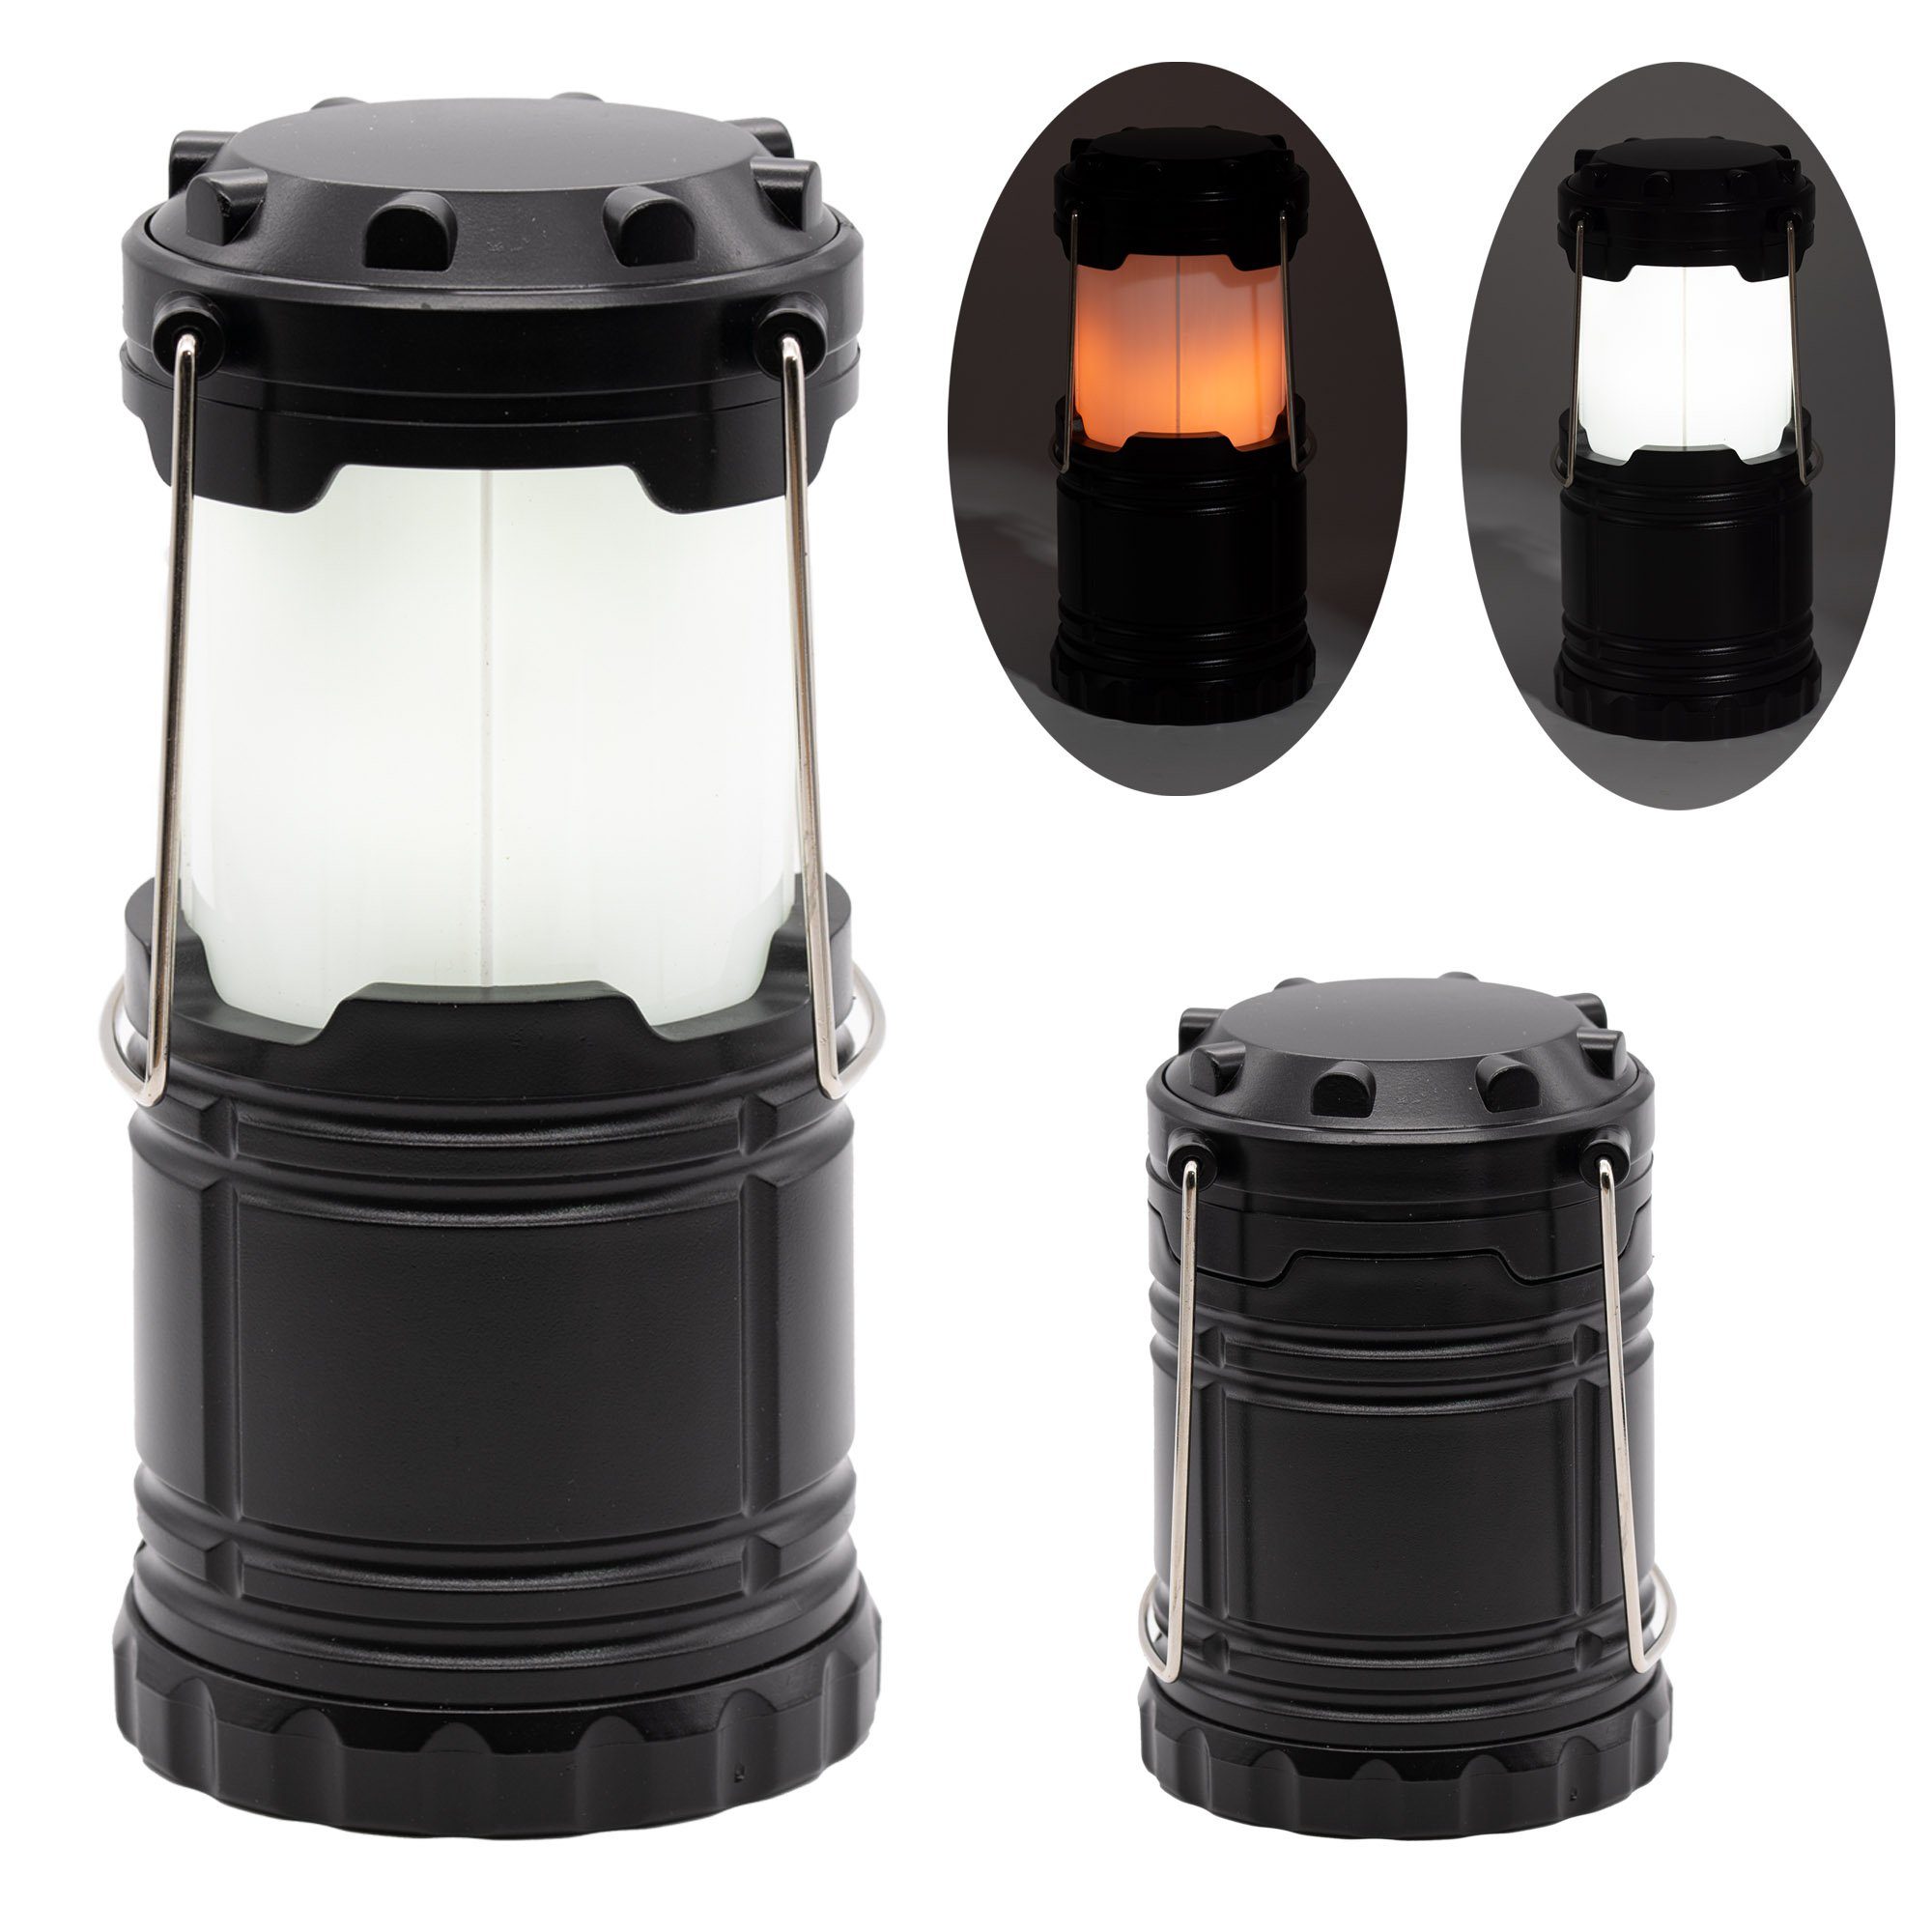 Garten, Flammen, 2in1 Leuchte Lampe Campinglampe Laterne, Zelt Batterie, BENSON LED Effekt Taschenlampe